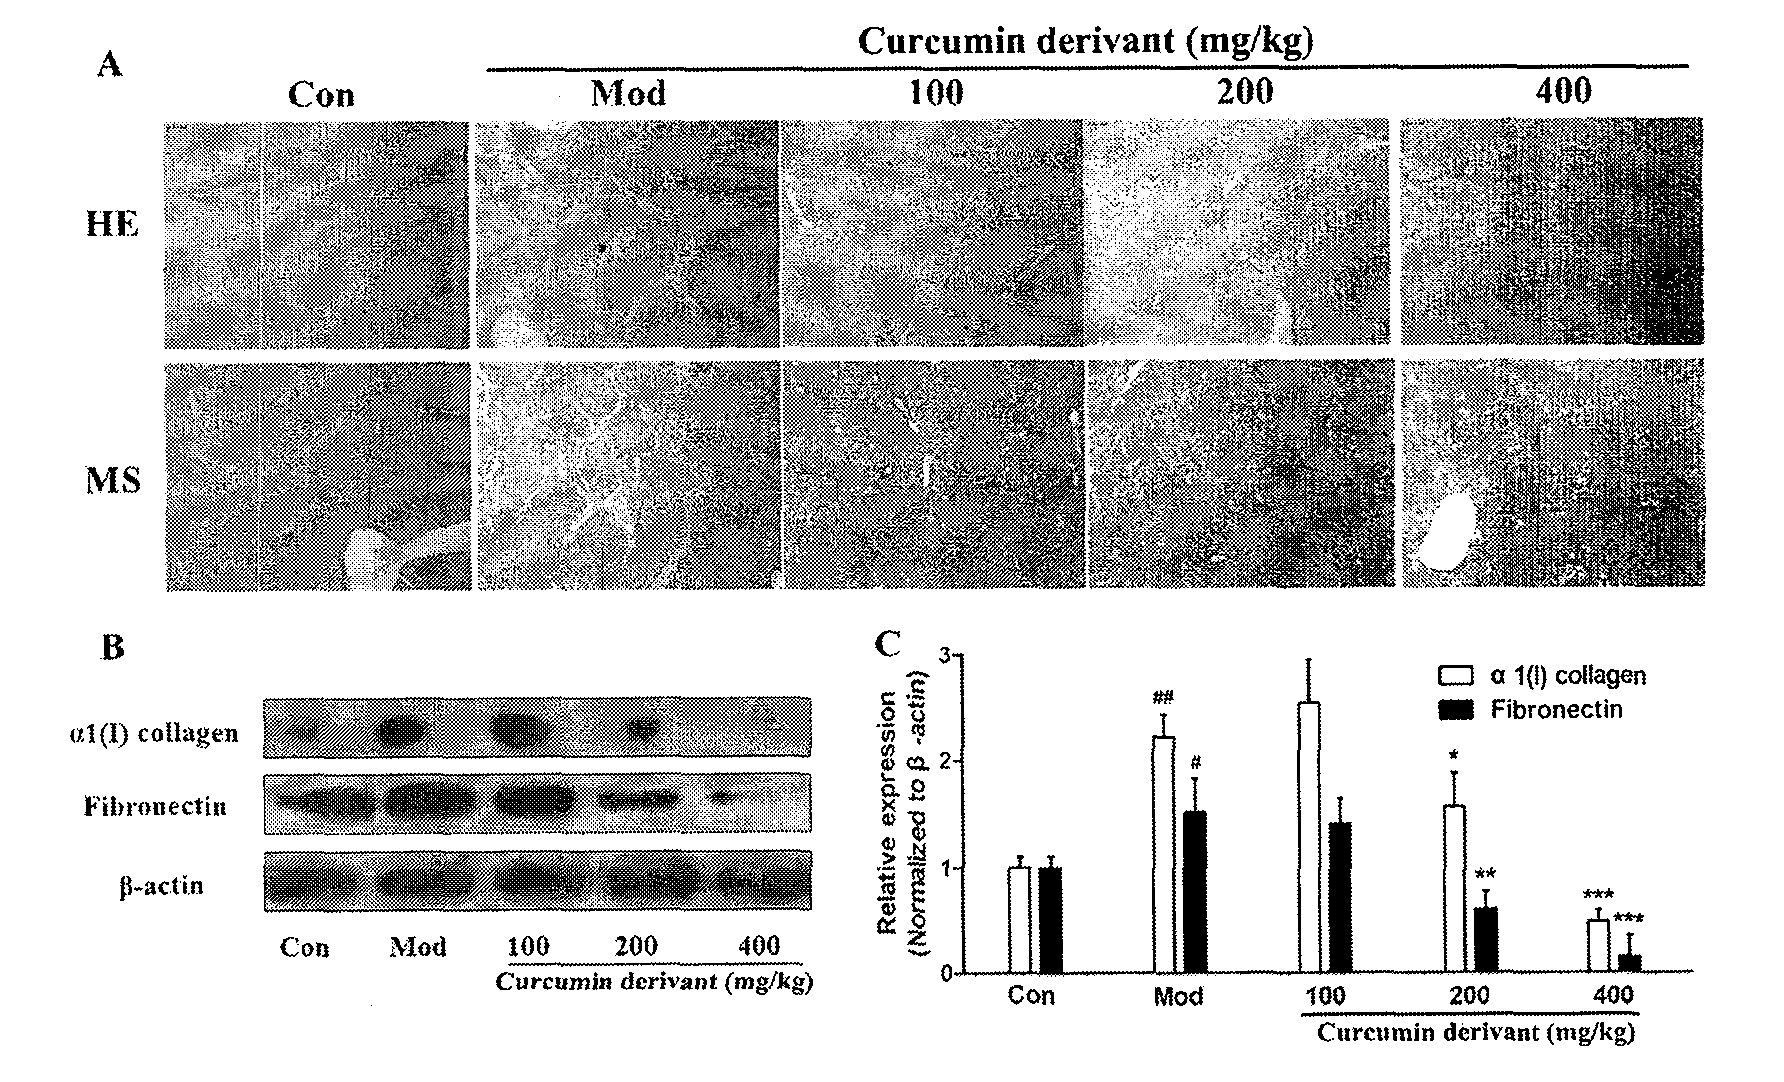 Curcumin derivative and application of curcumin derivative as cannabinoid receptor modulator